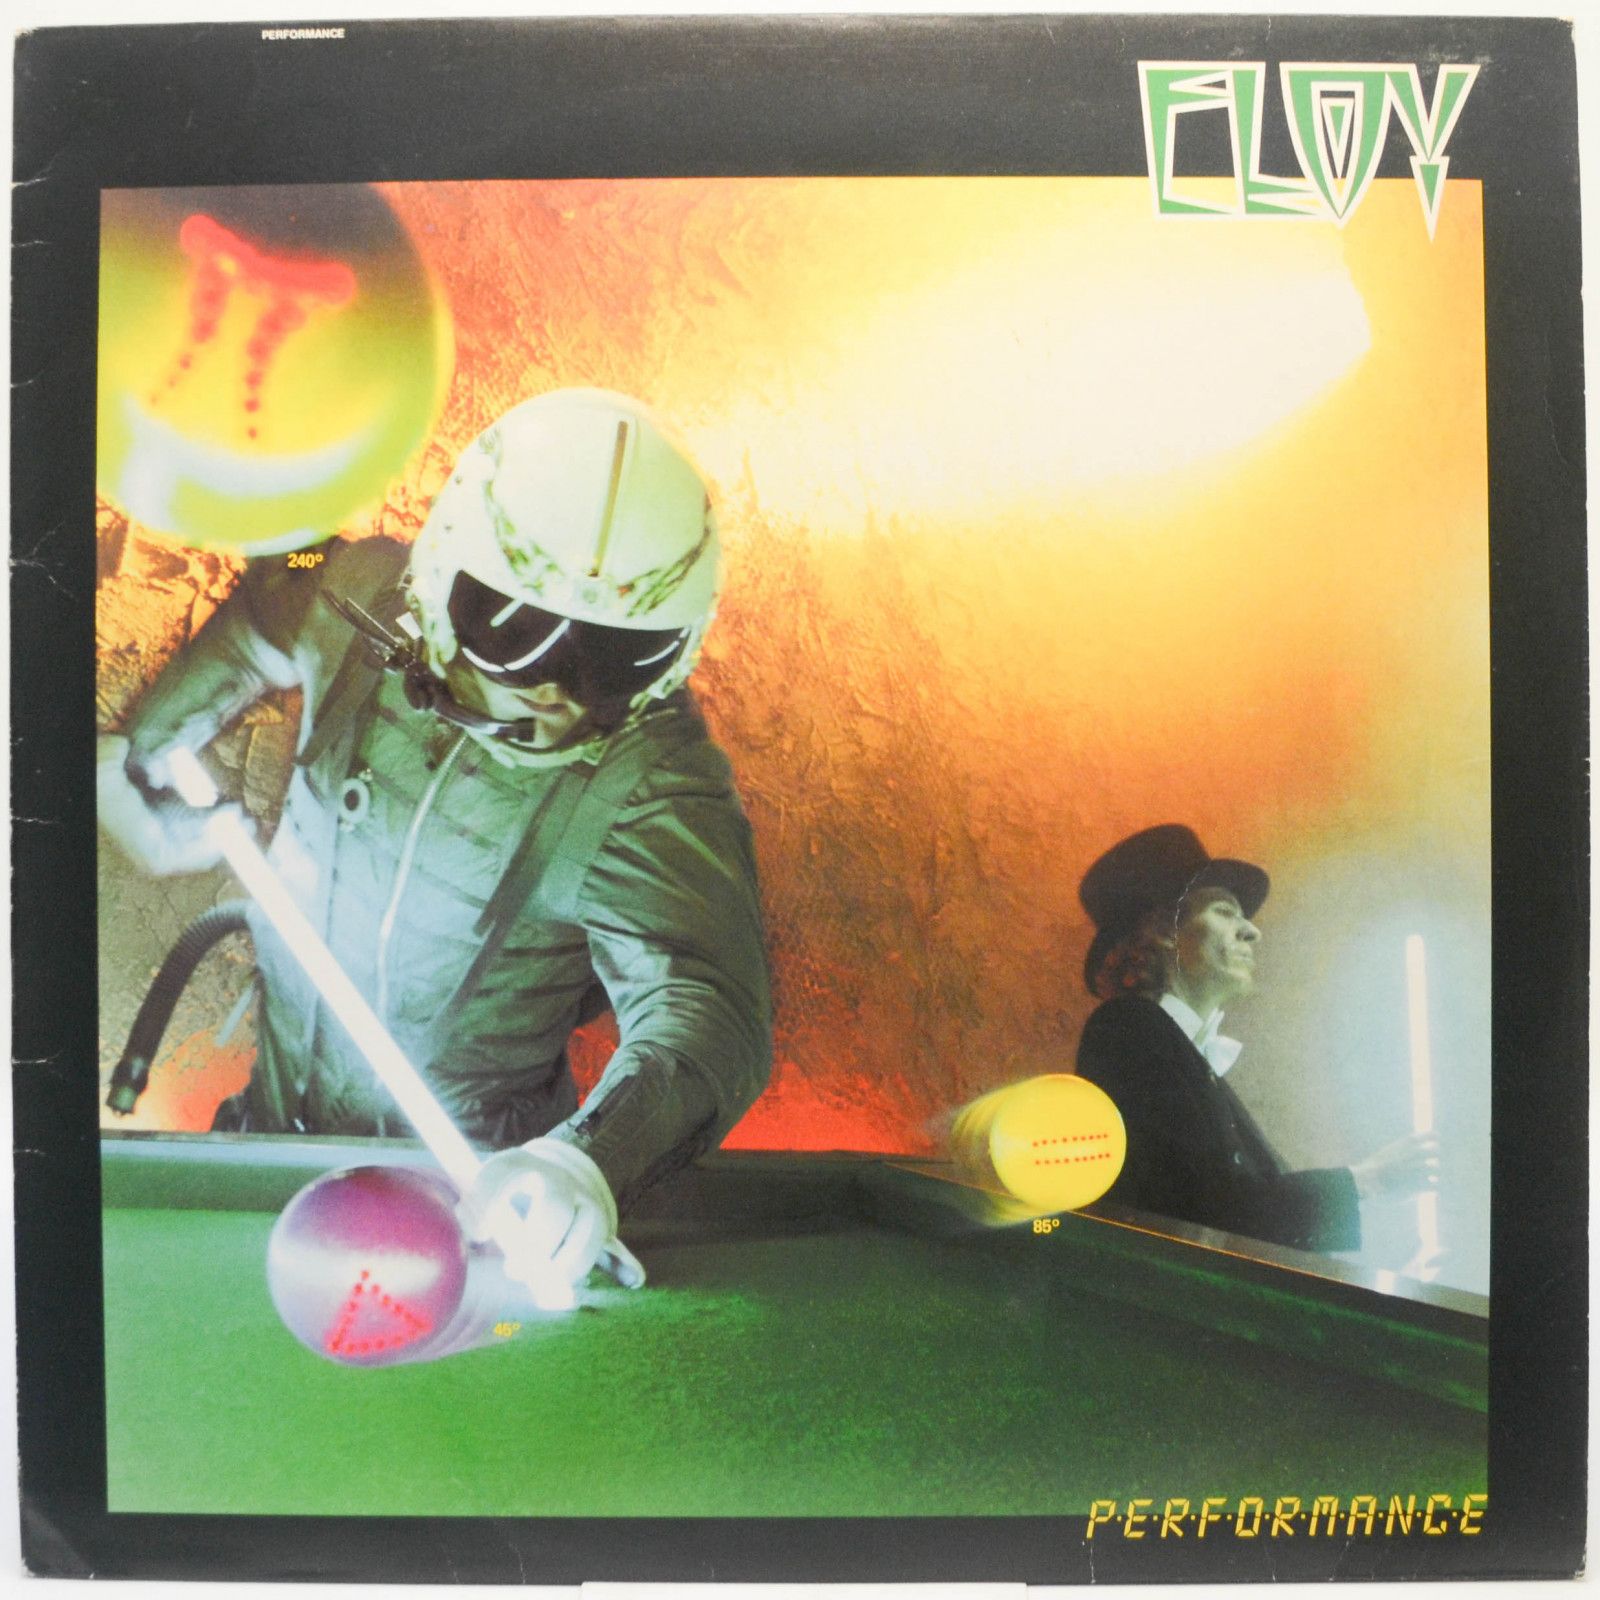 Eloy — Performance (UK), 1983